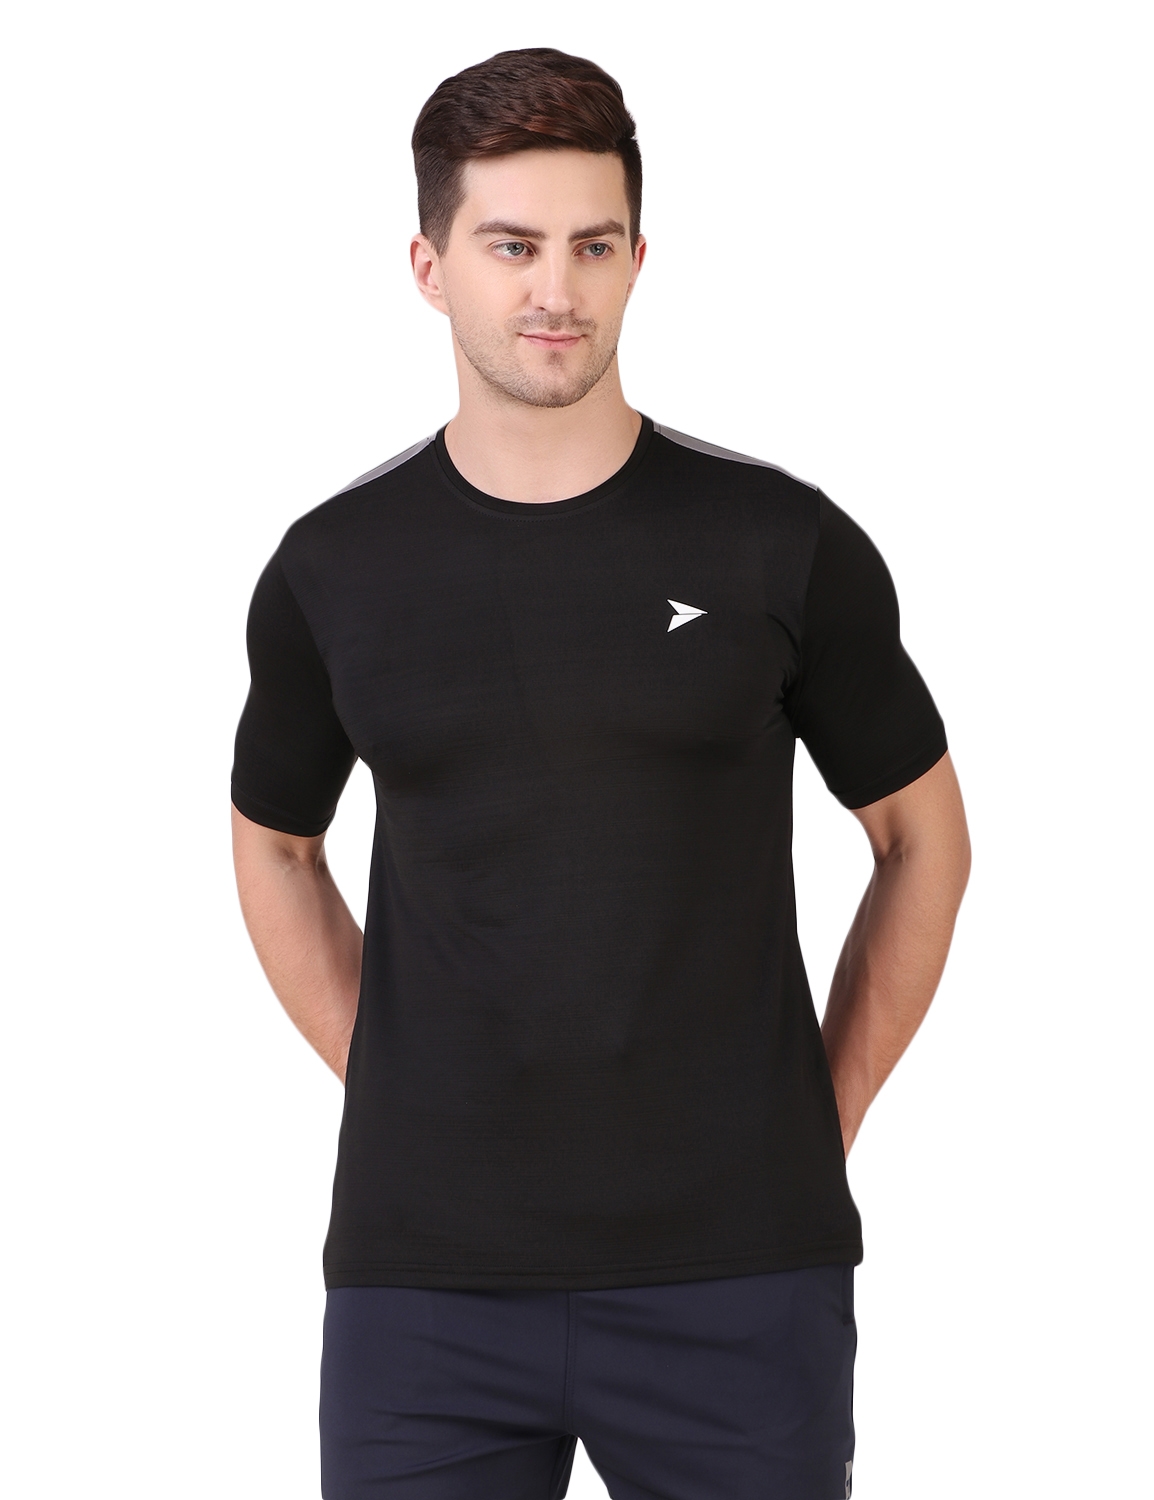 Fitinc Men's Round Neck Slimfit Gym & Active Sports Black T-Shirt